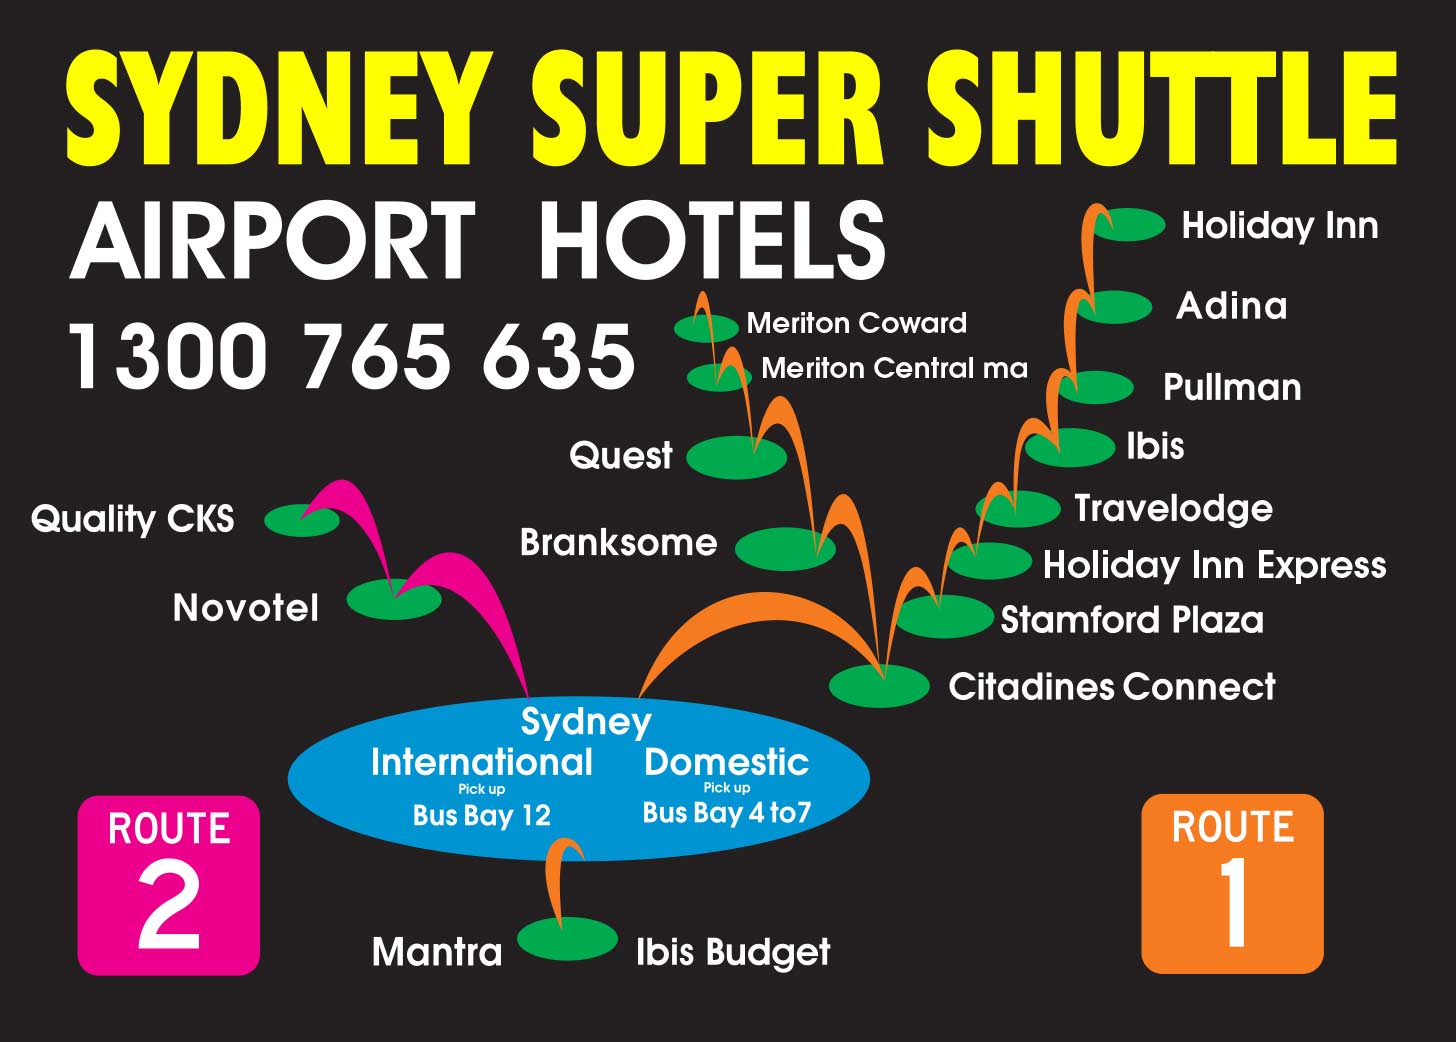 Airport Hotels Shuttle Service - Sydney Super Shuttle